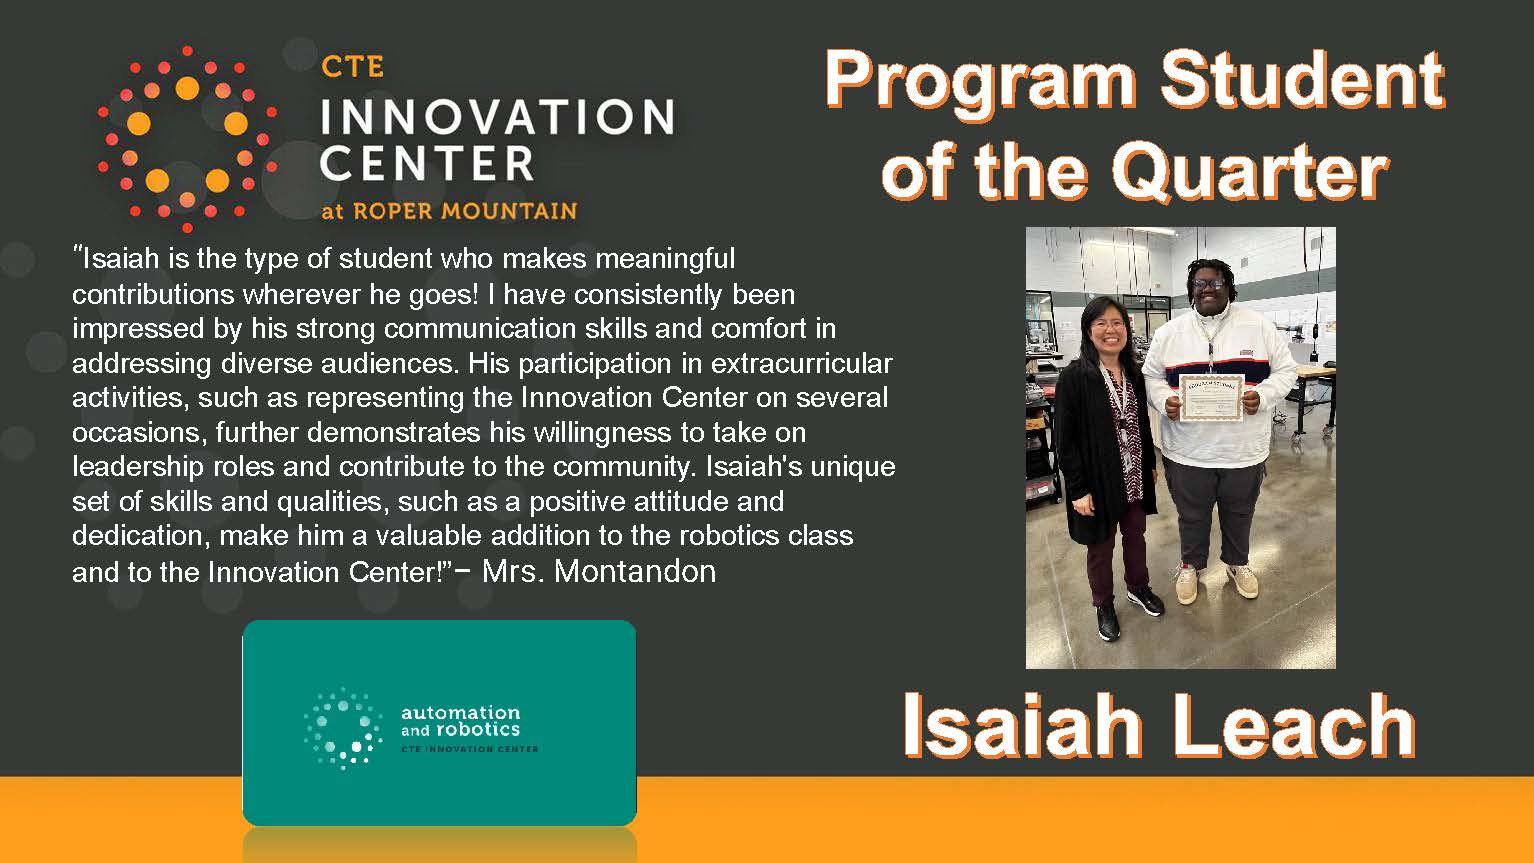 Isaiah Leach Program Student of the Quarter